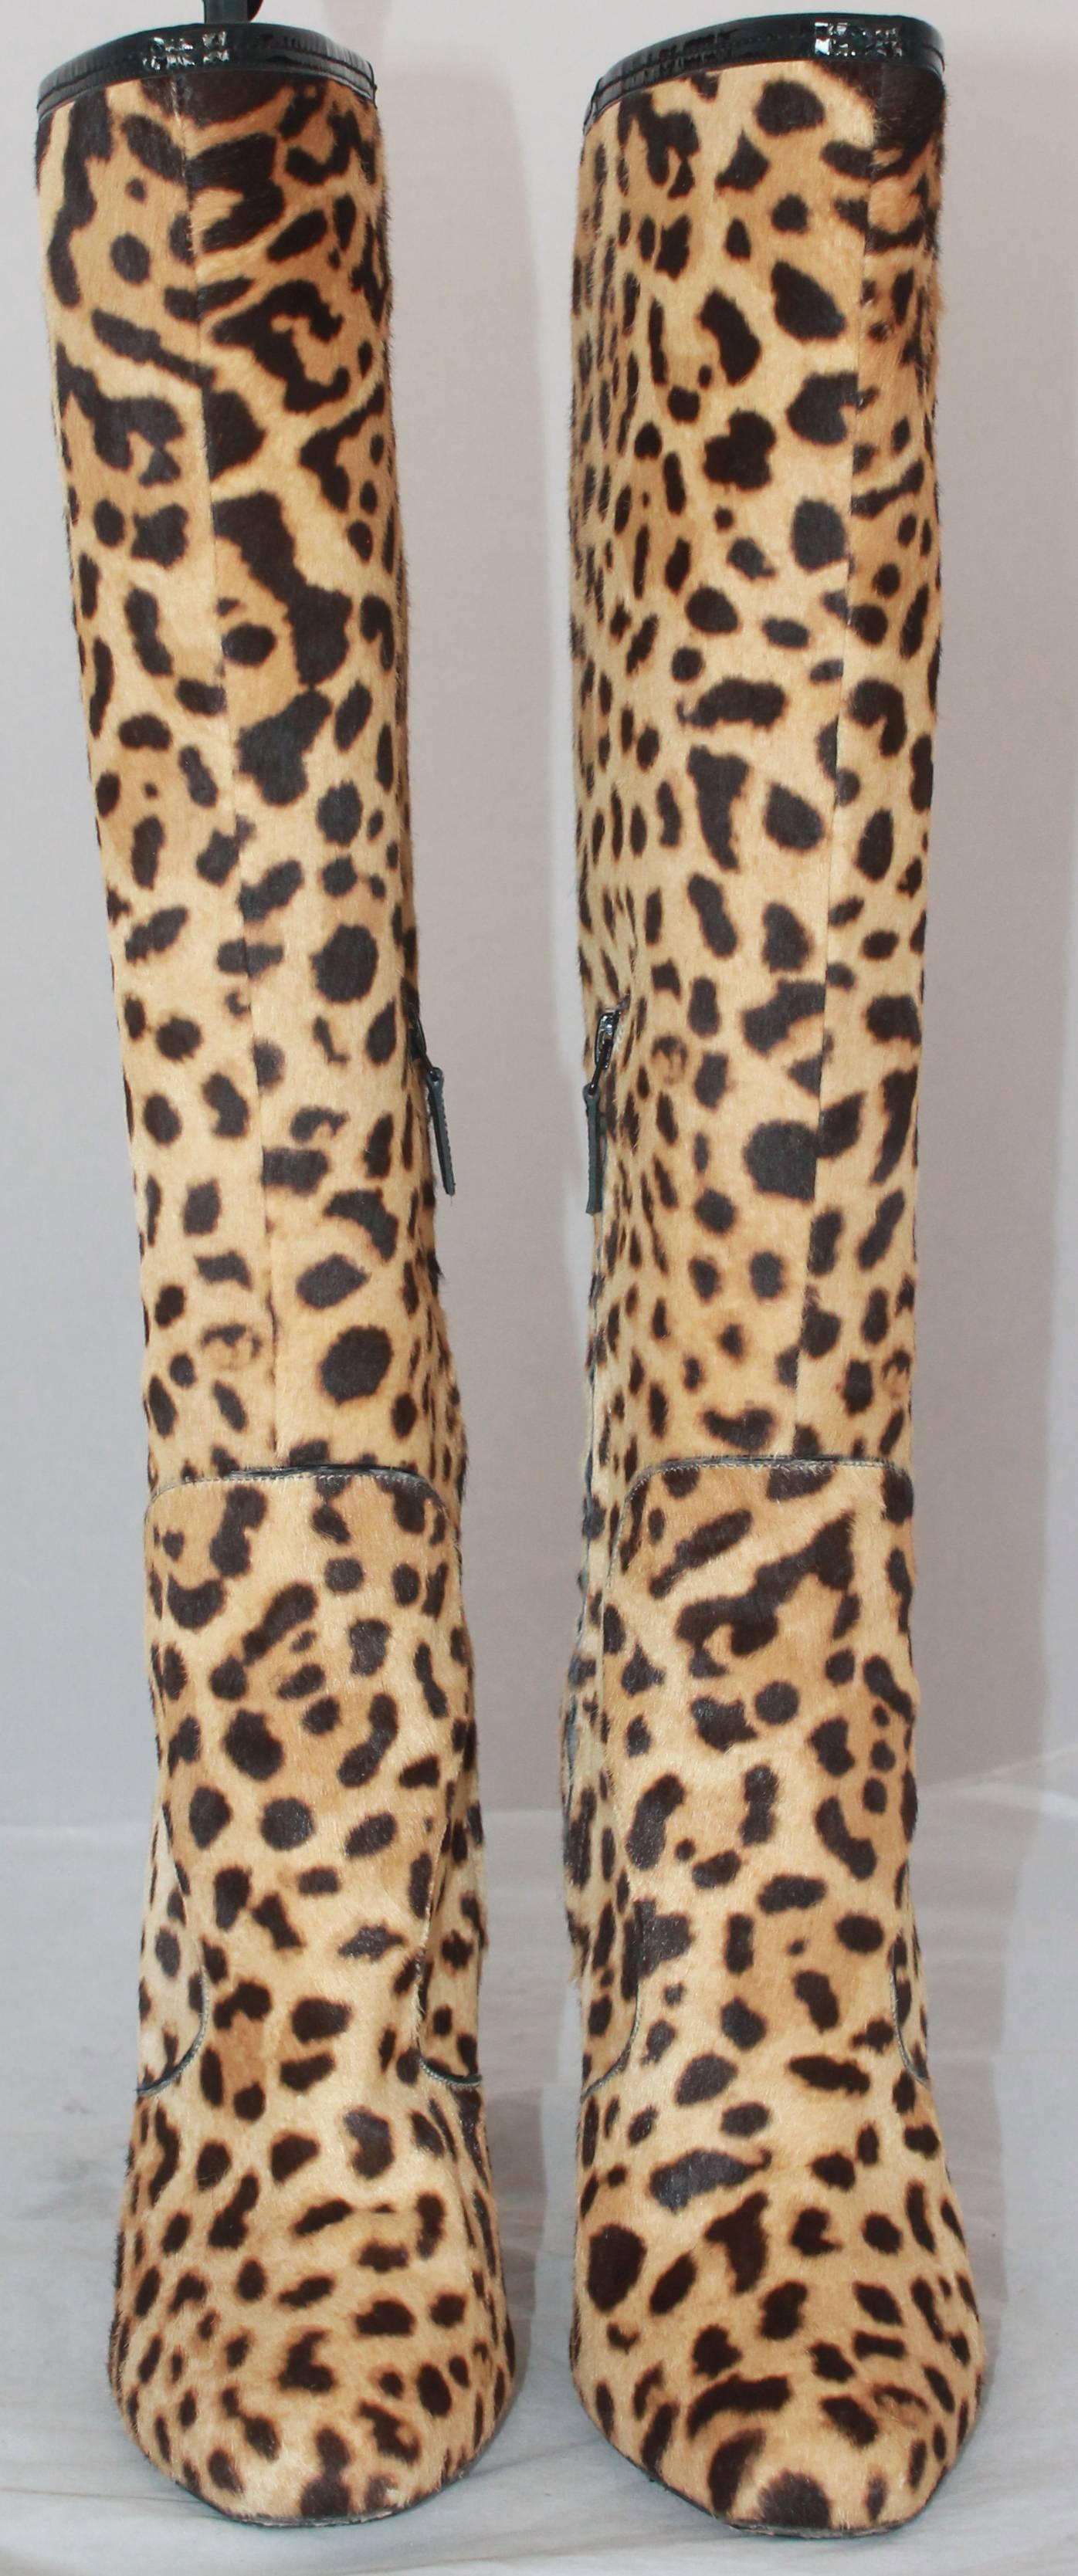 leopard print knee high boots